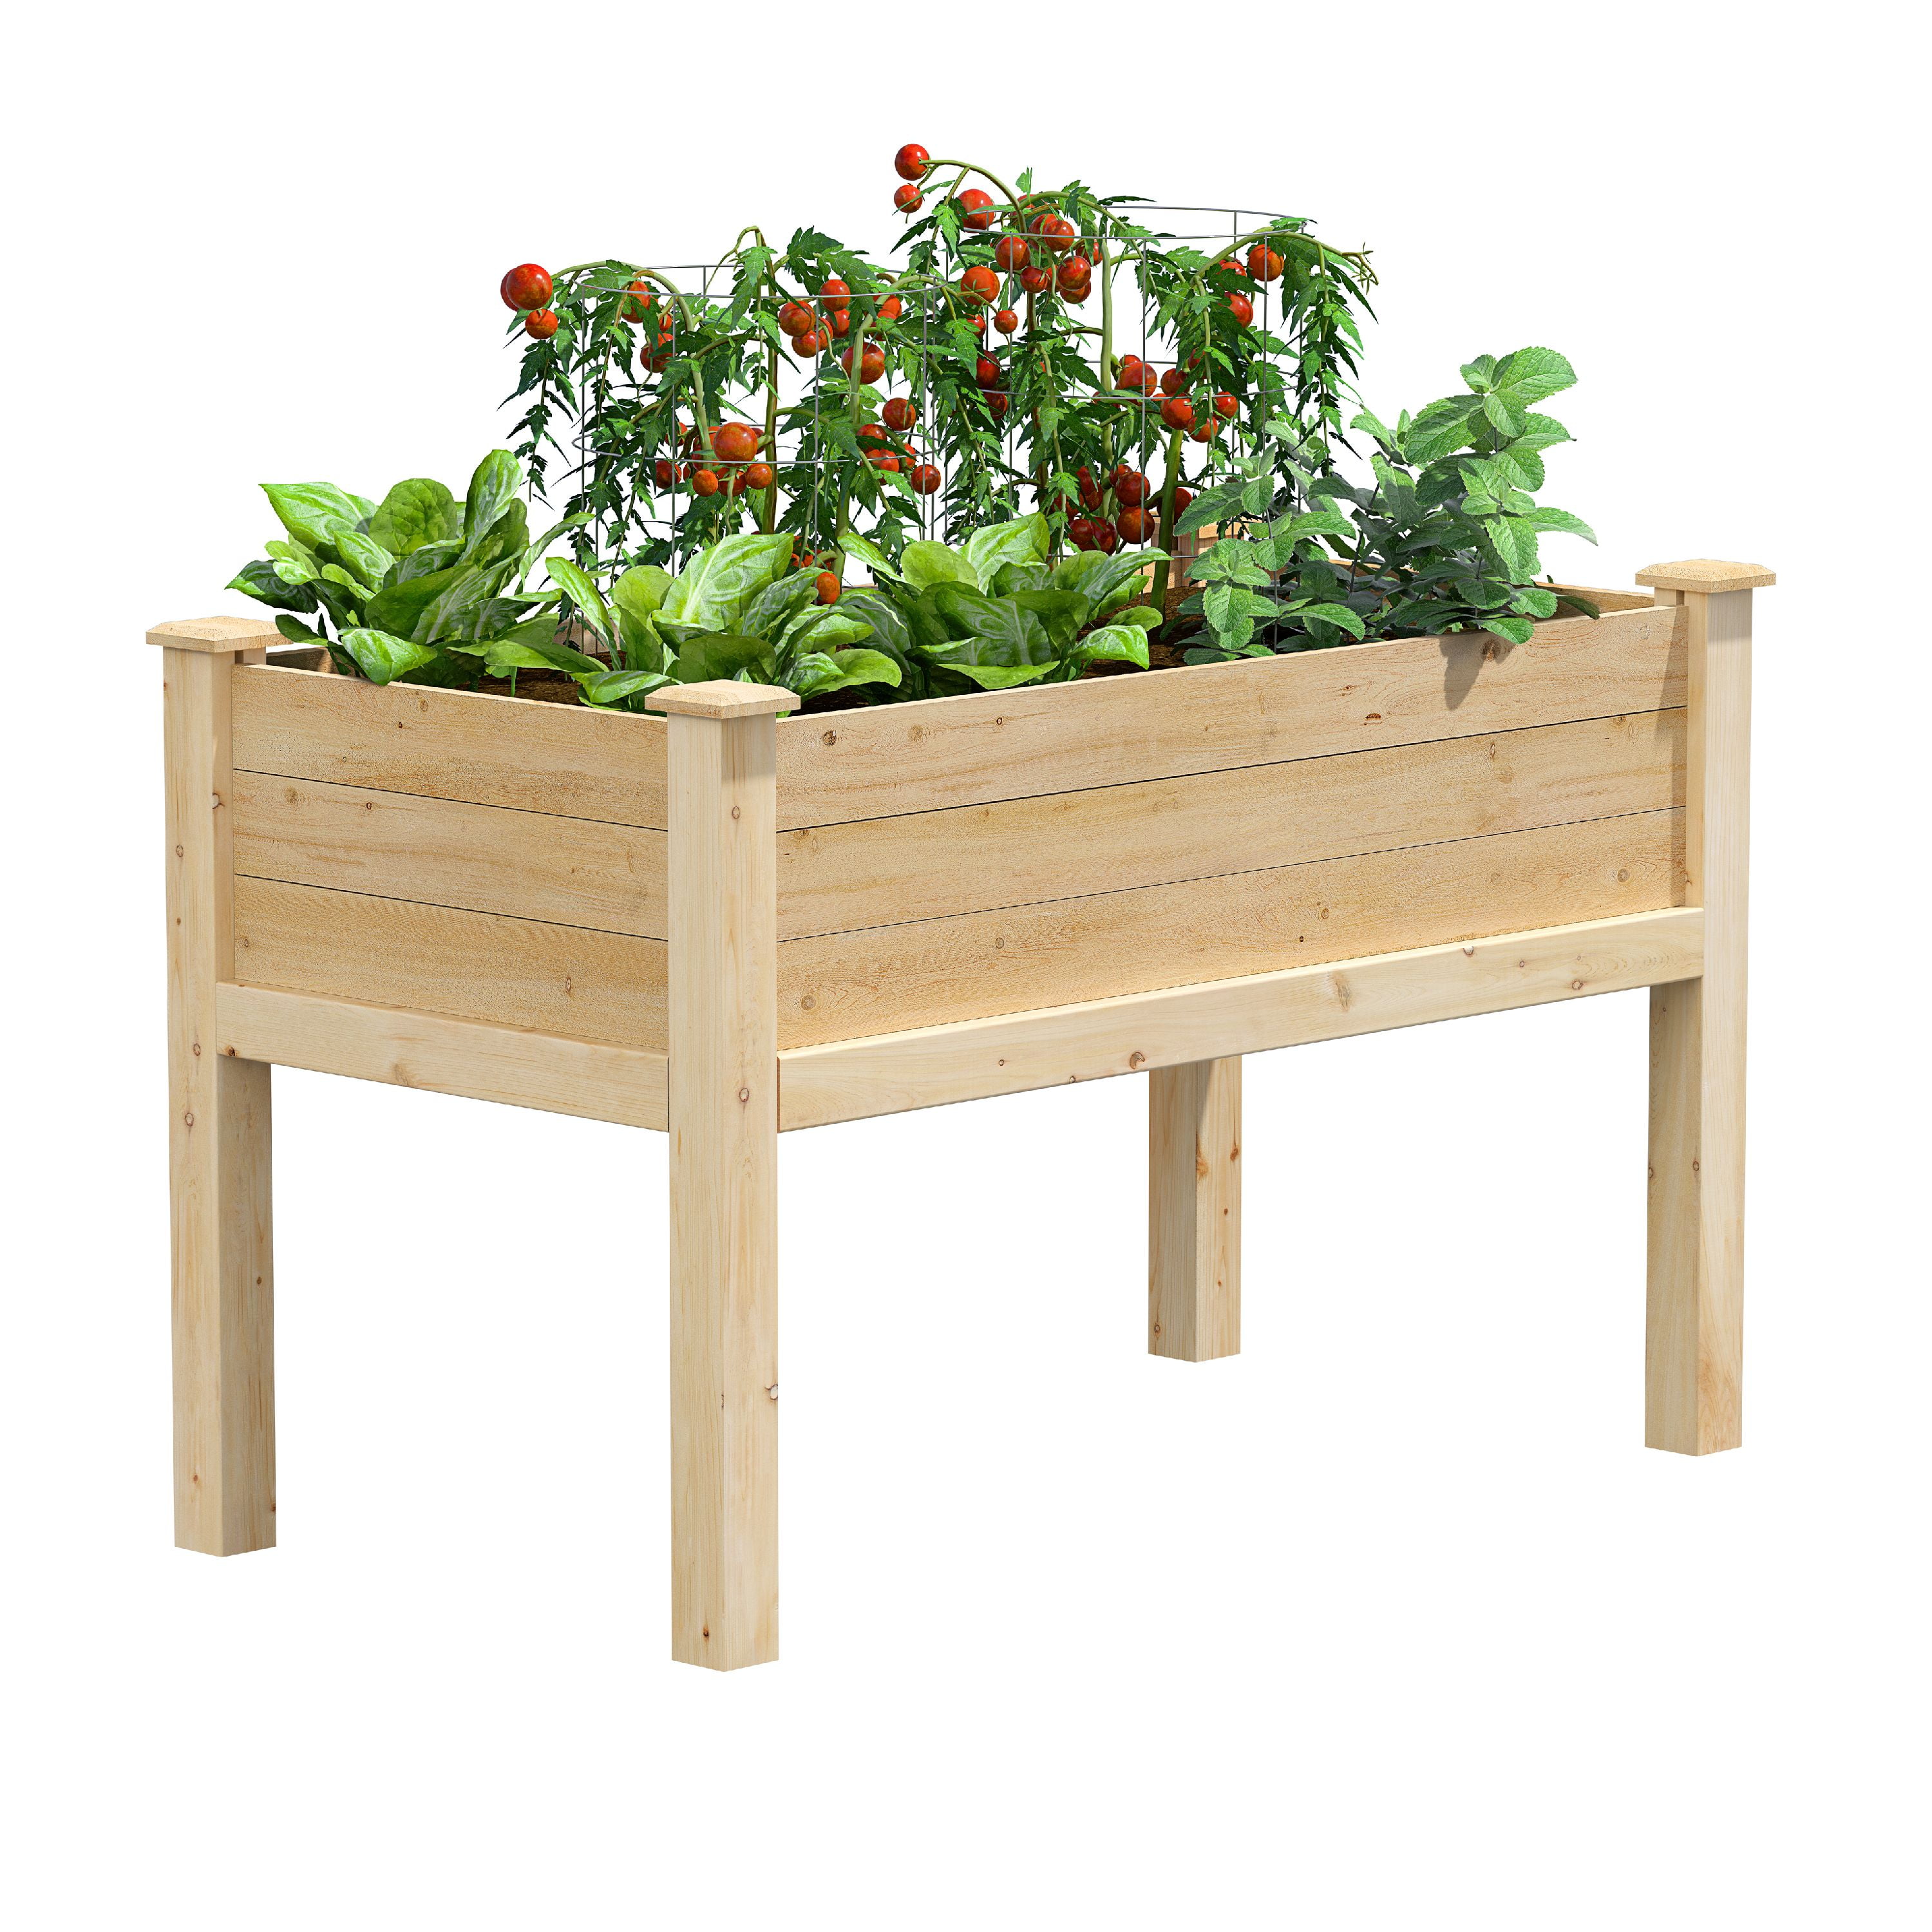 Portable Raised Garden Planter Box Outdoor Elevated Flower Vegetable Bed Wheels 